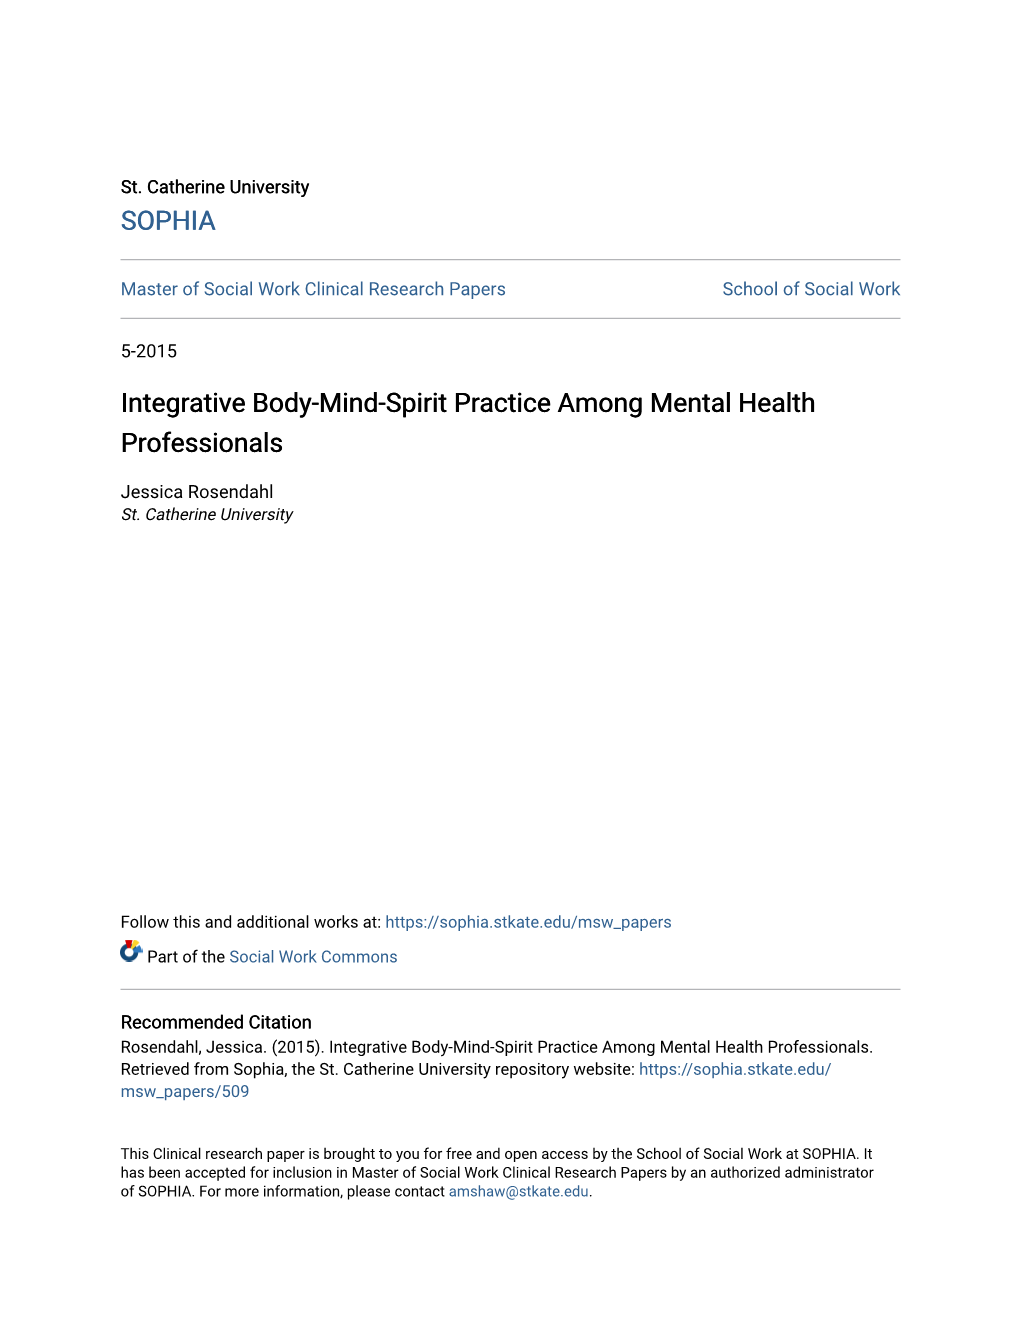 Integrative Body-Mind-Spirit Practice Among Mental Health Professionals